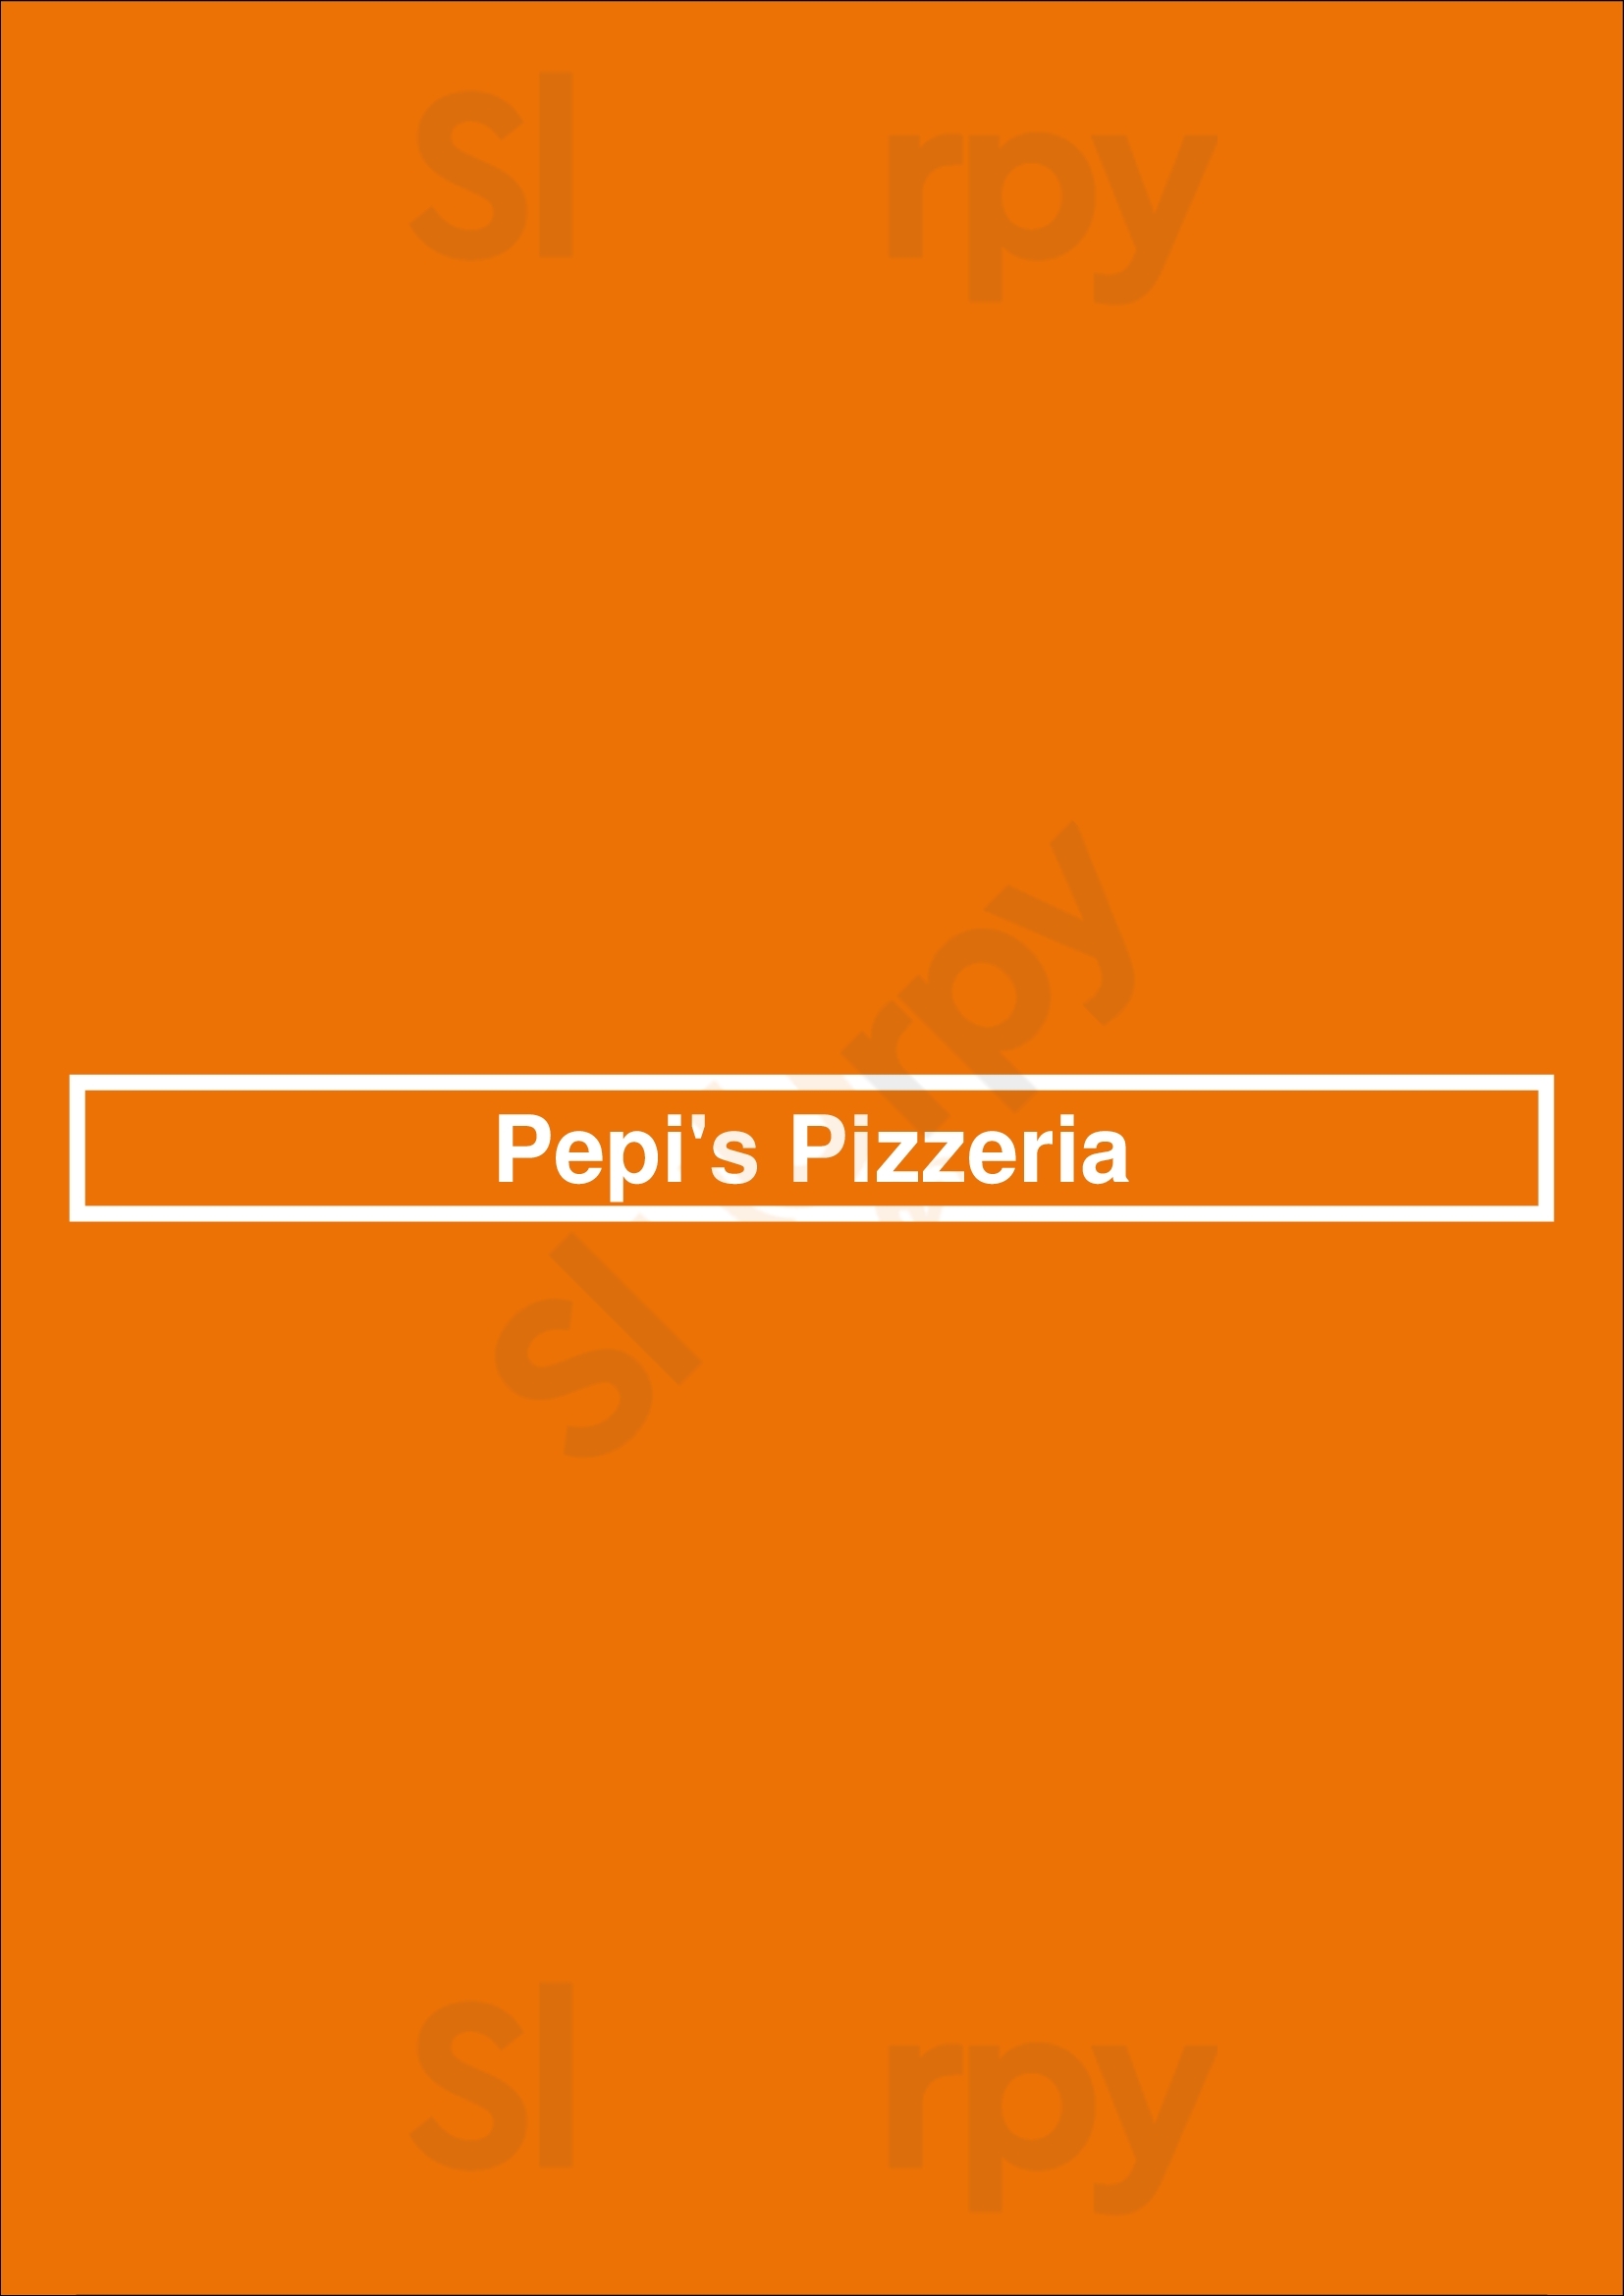 Pepi's Pizzeria Somerville Menu - 1